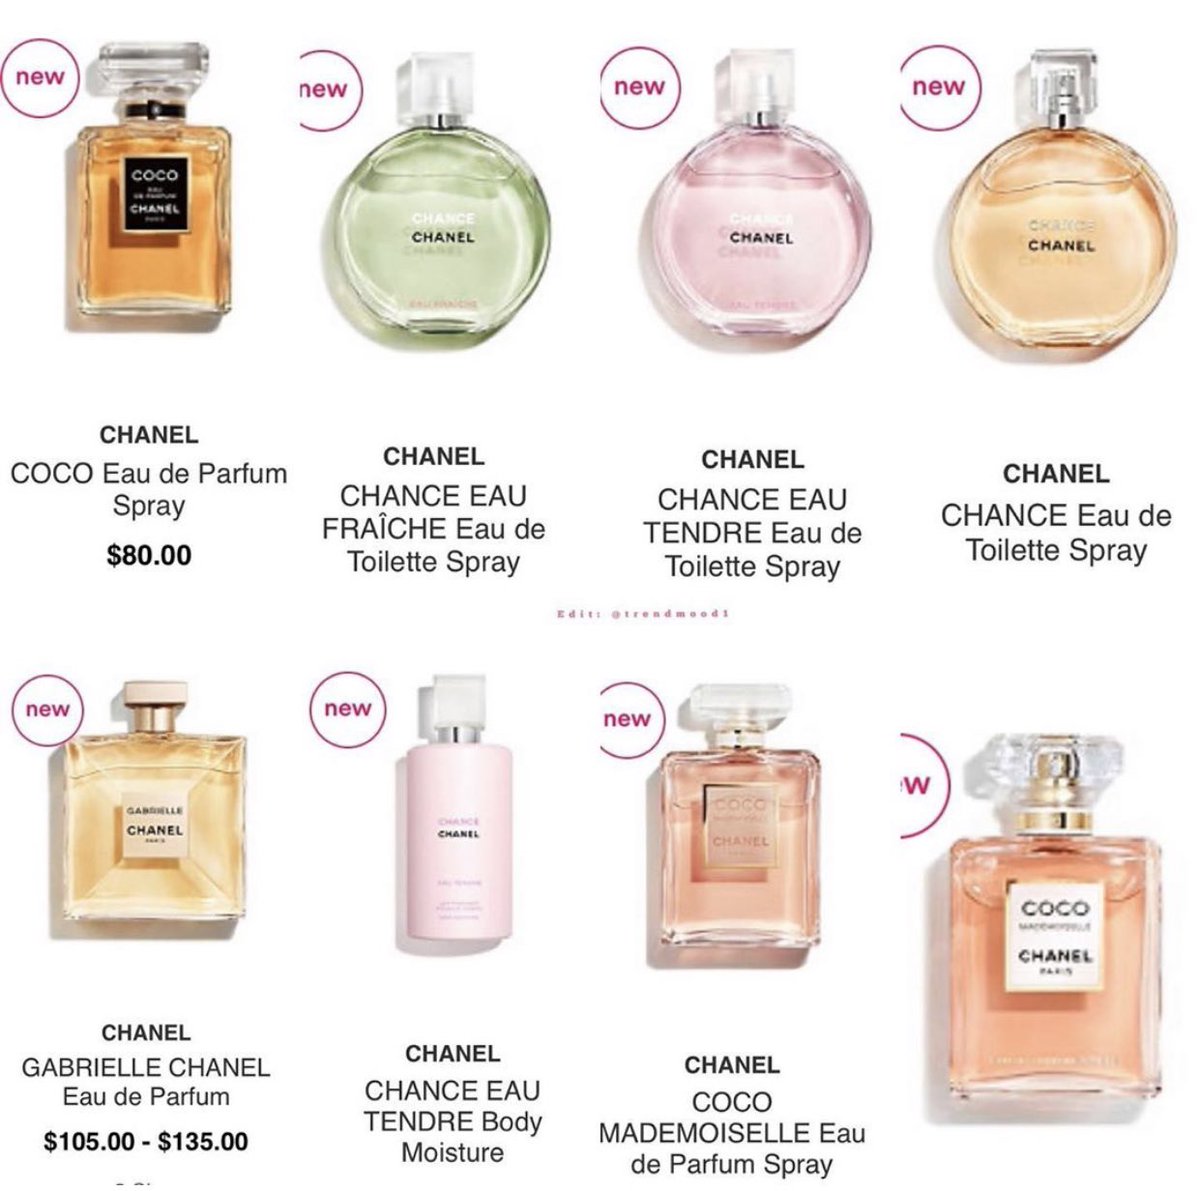 Gabrielle Chanel Tagul Perfume Review